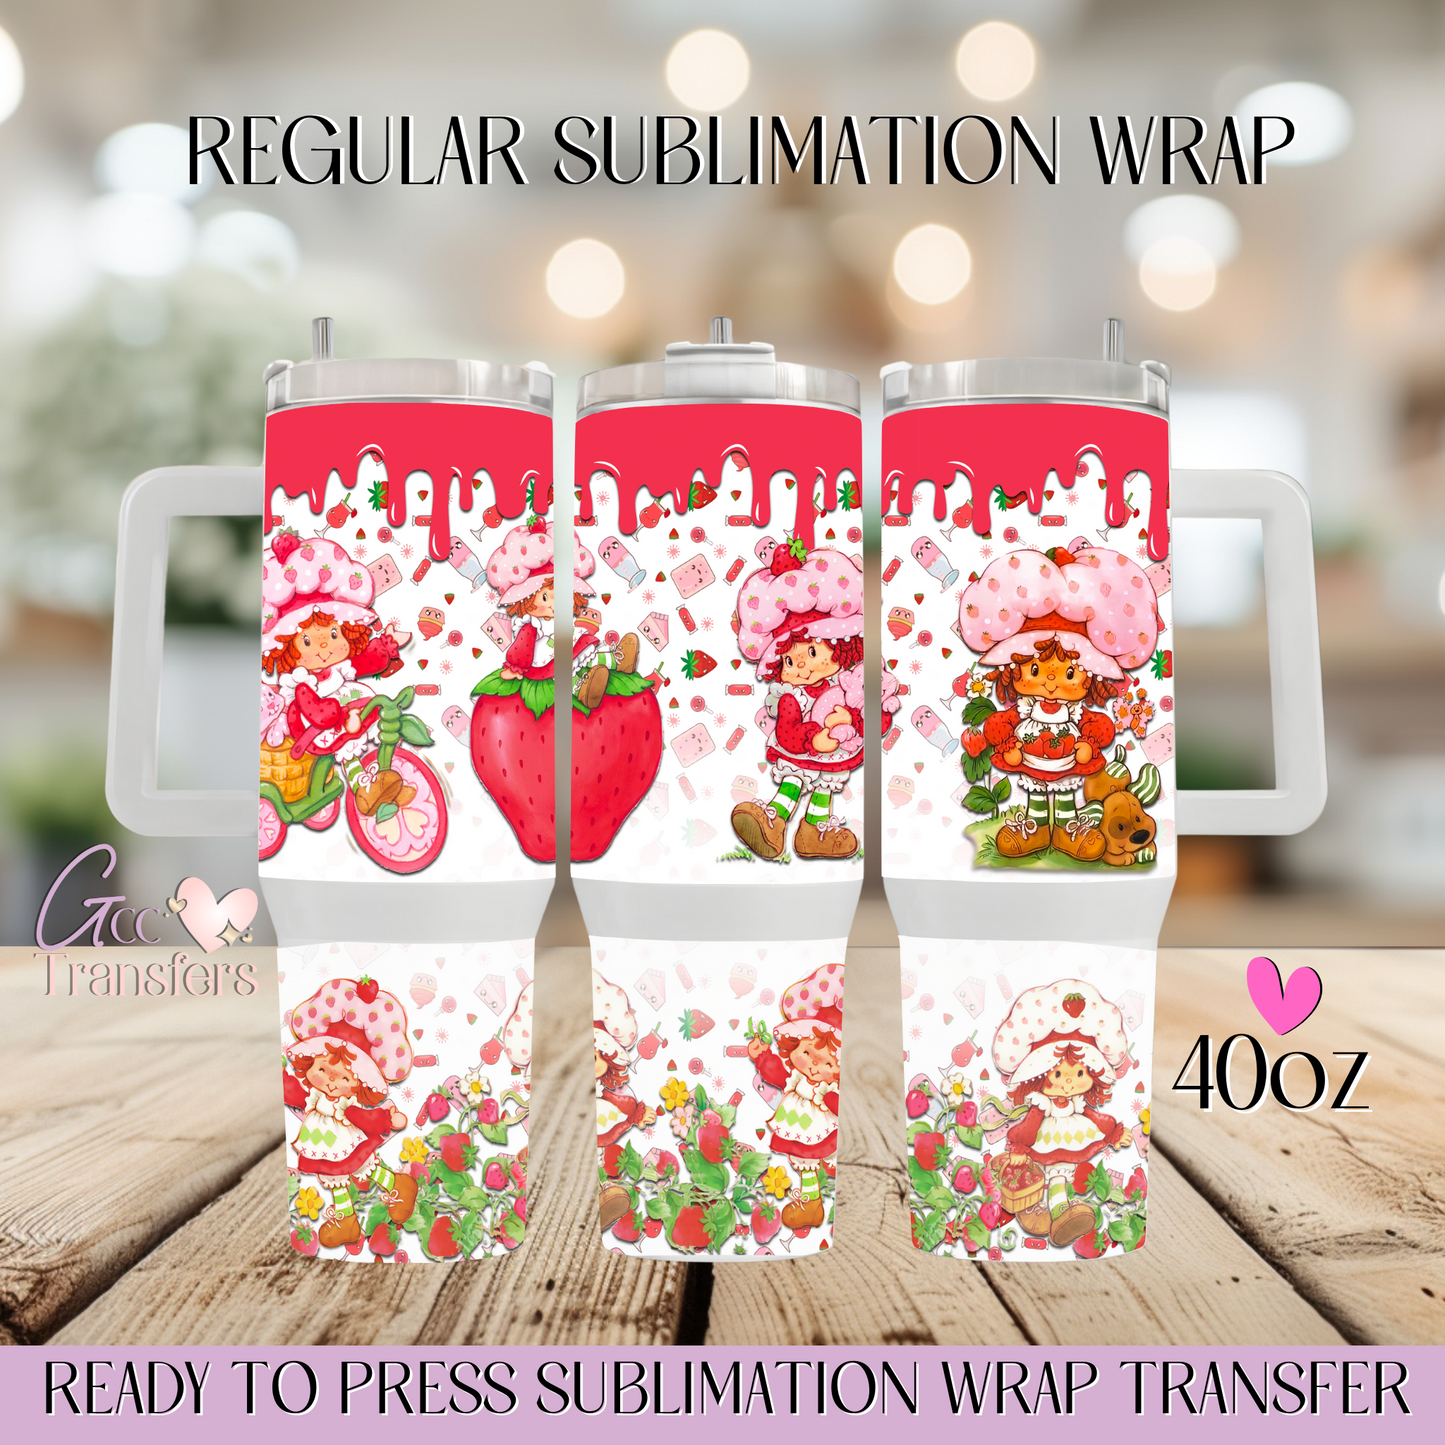 Strawberry Cartoon - 40oz Regular Sublimation Wrap